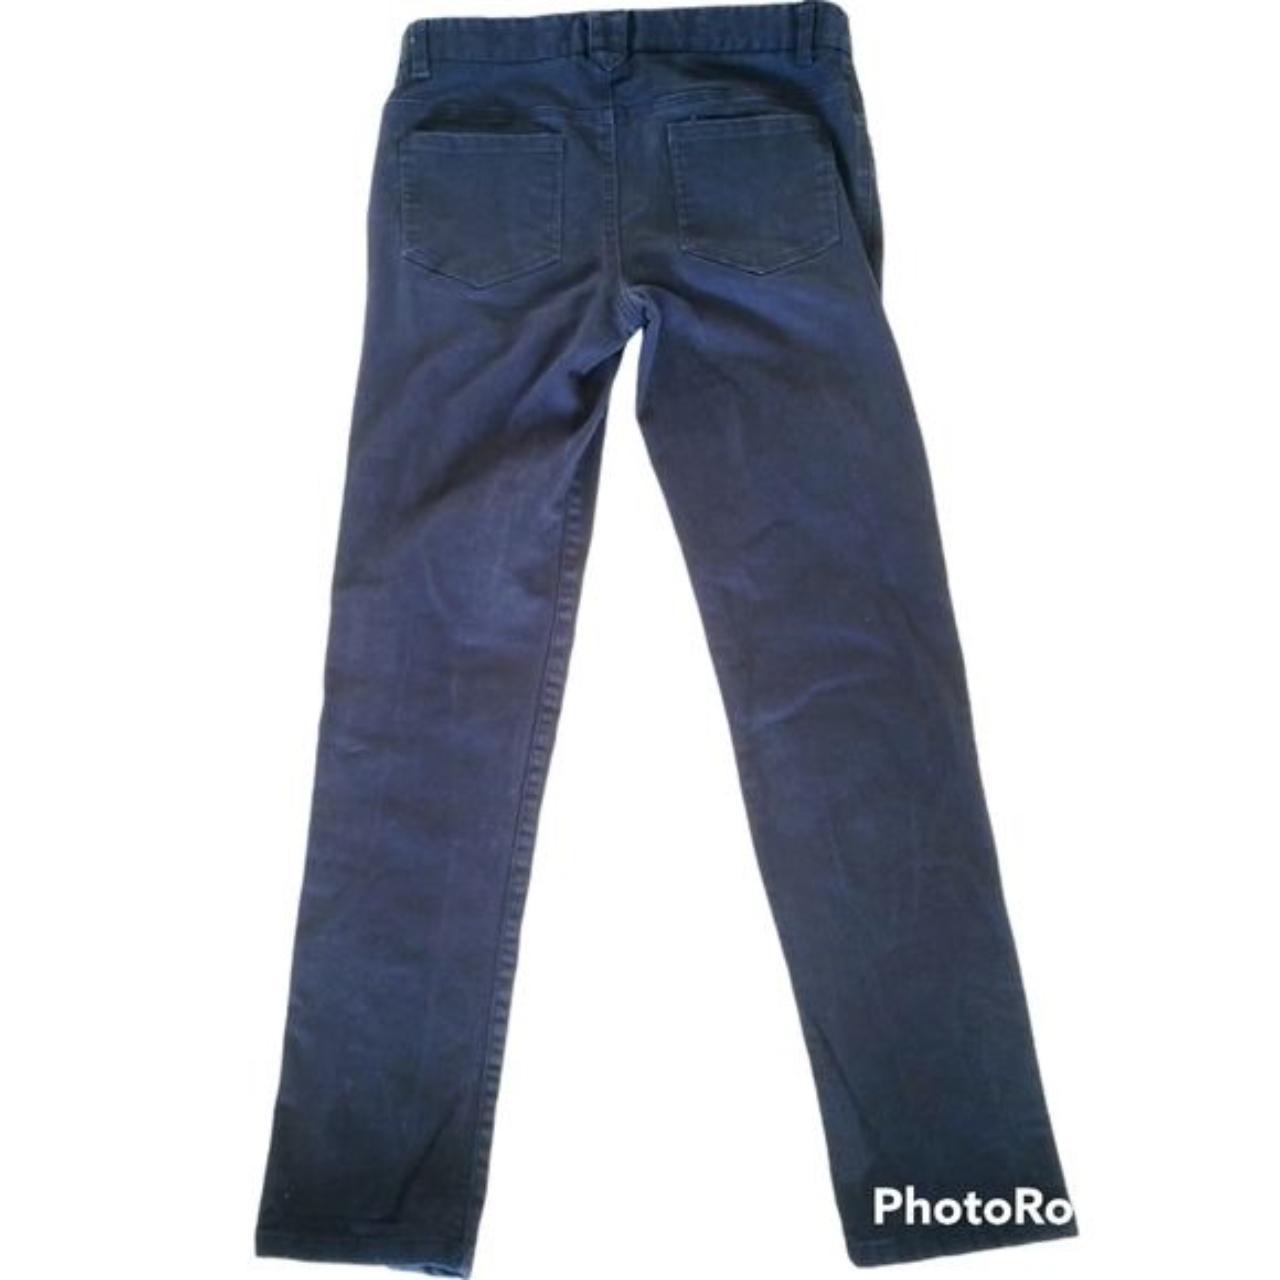 Shaun White Black Skinny Jeans Adjustable tab... - Depop